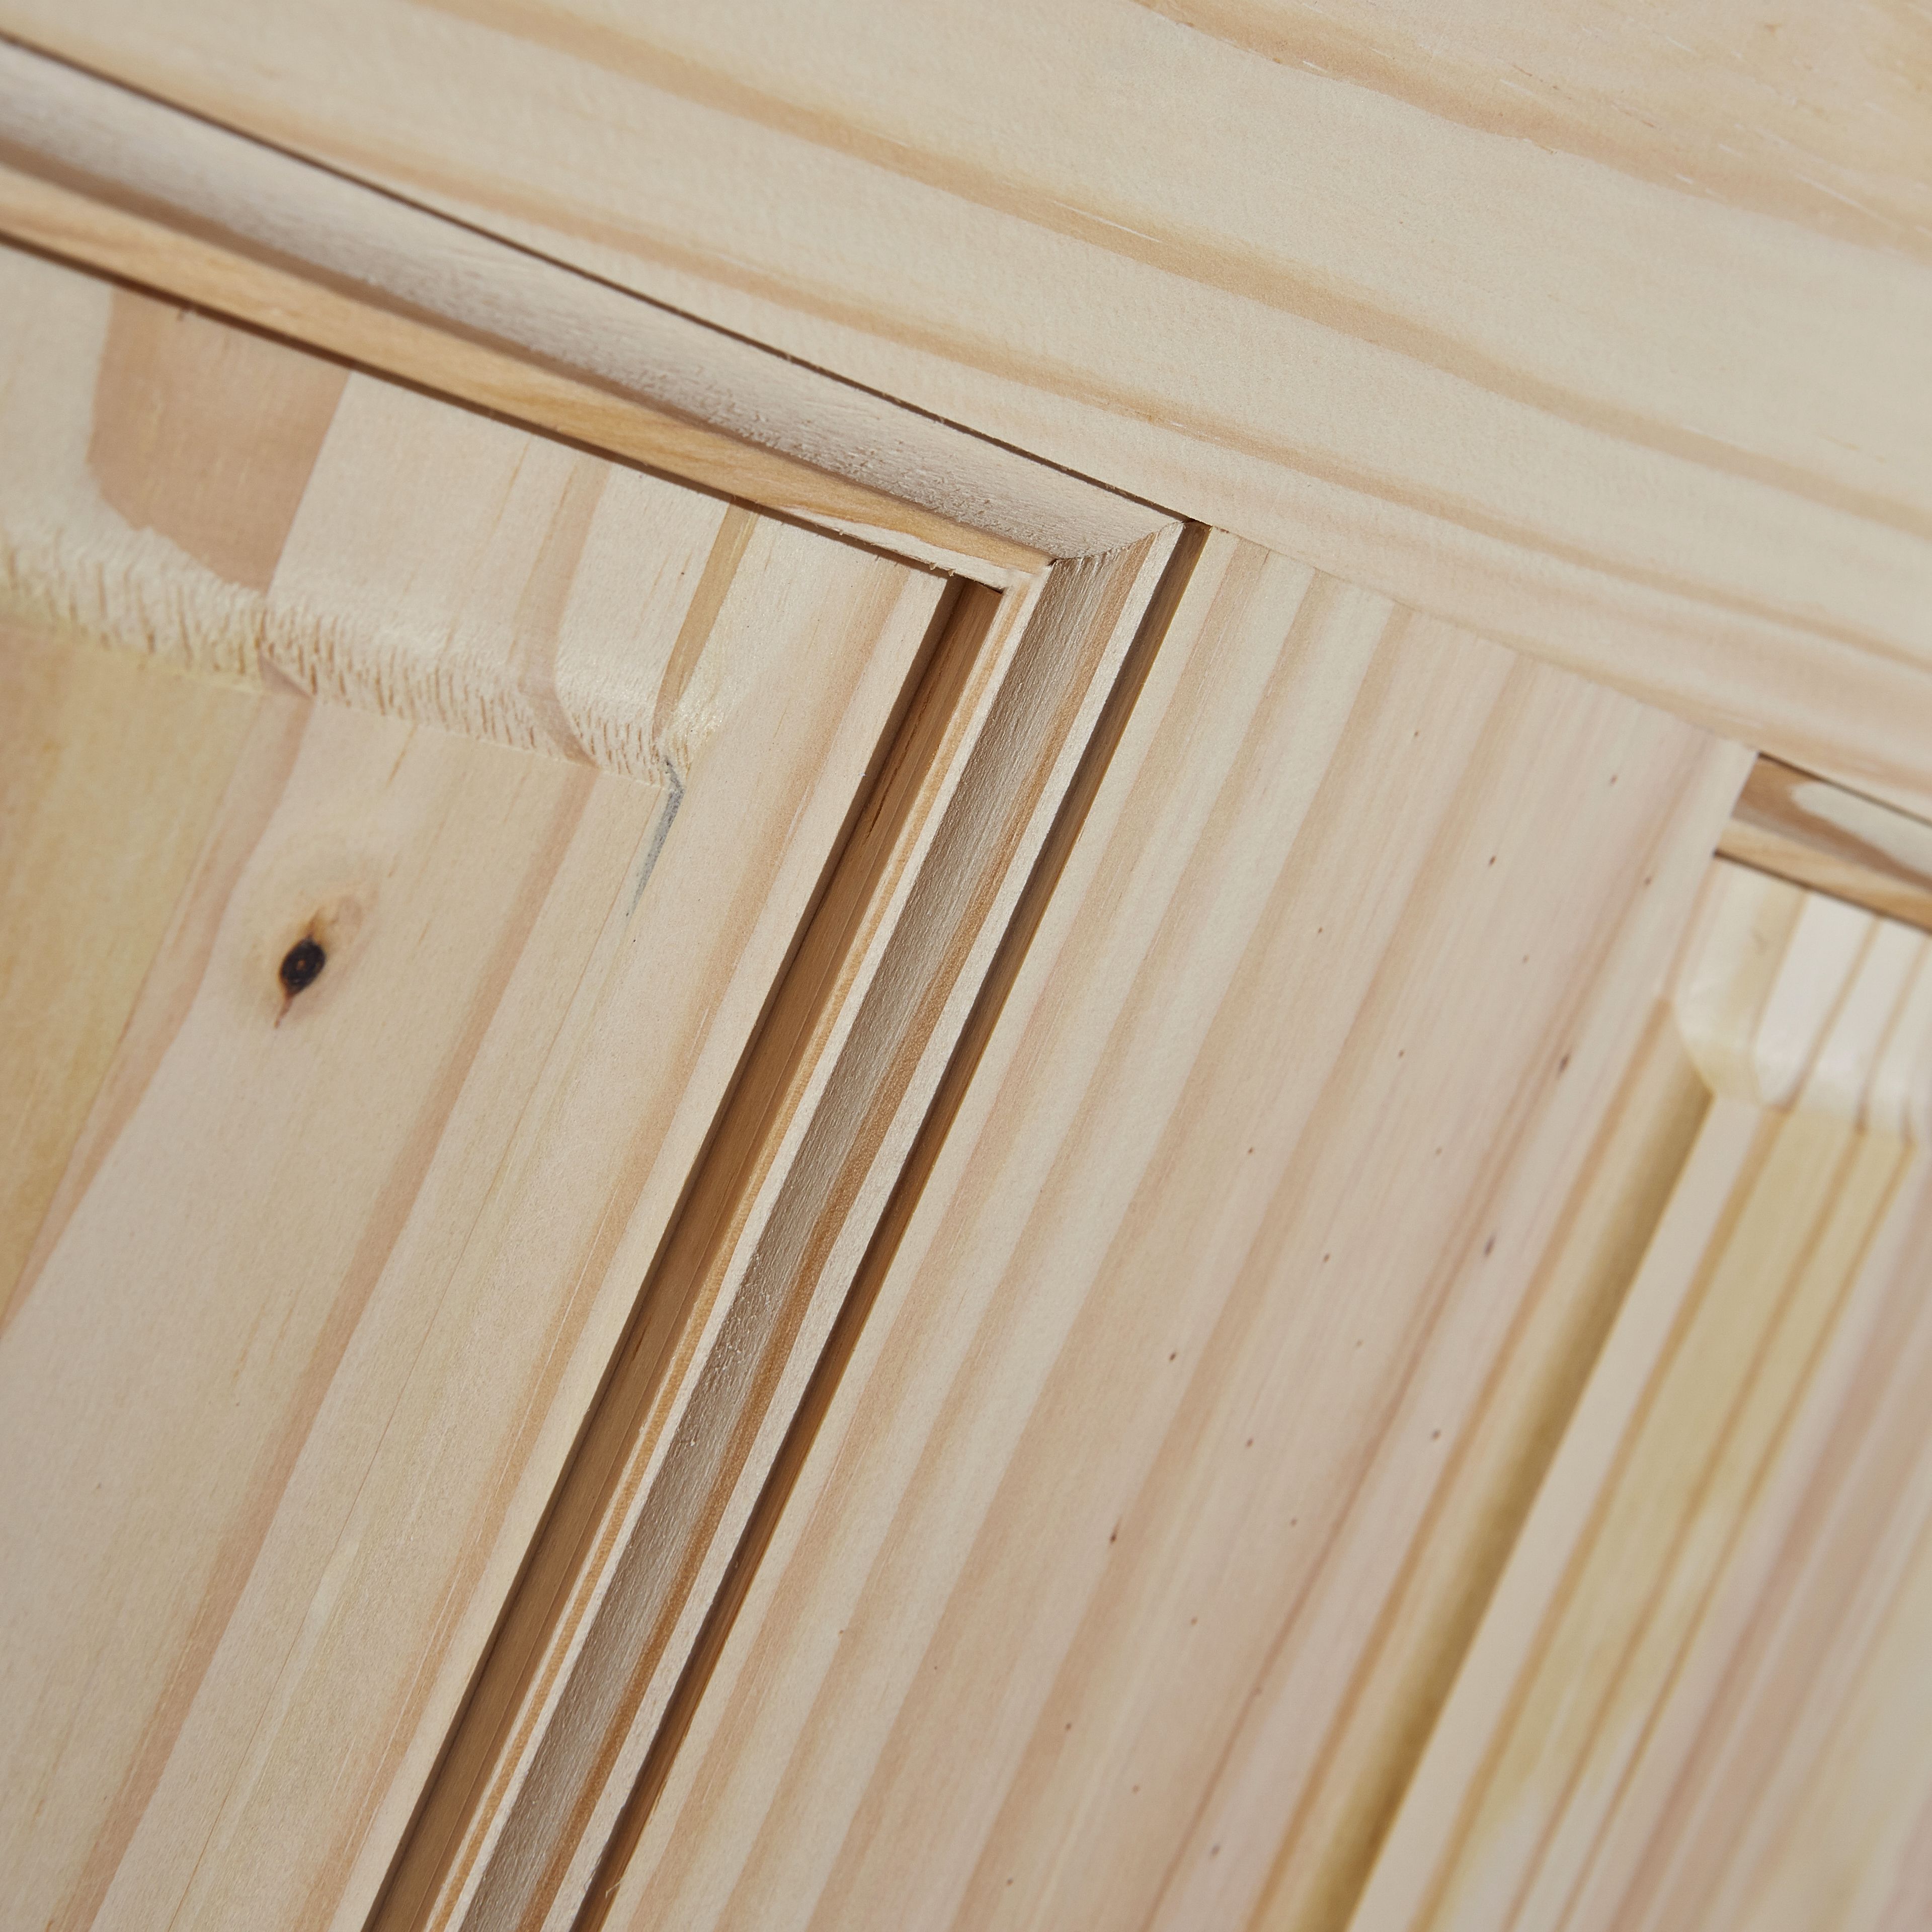 Geom 4 panel Unglazed Victorian Internal Knotty pine Door, (H)2040mm (W)726mm (T)40mm